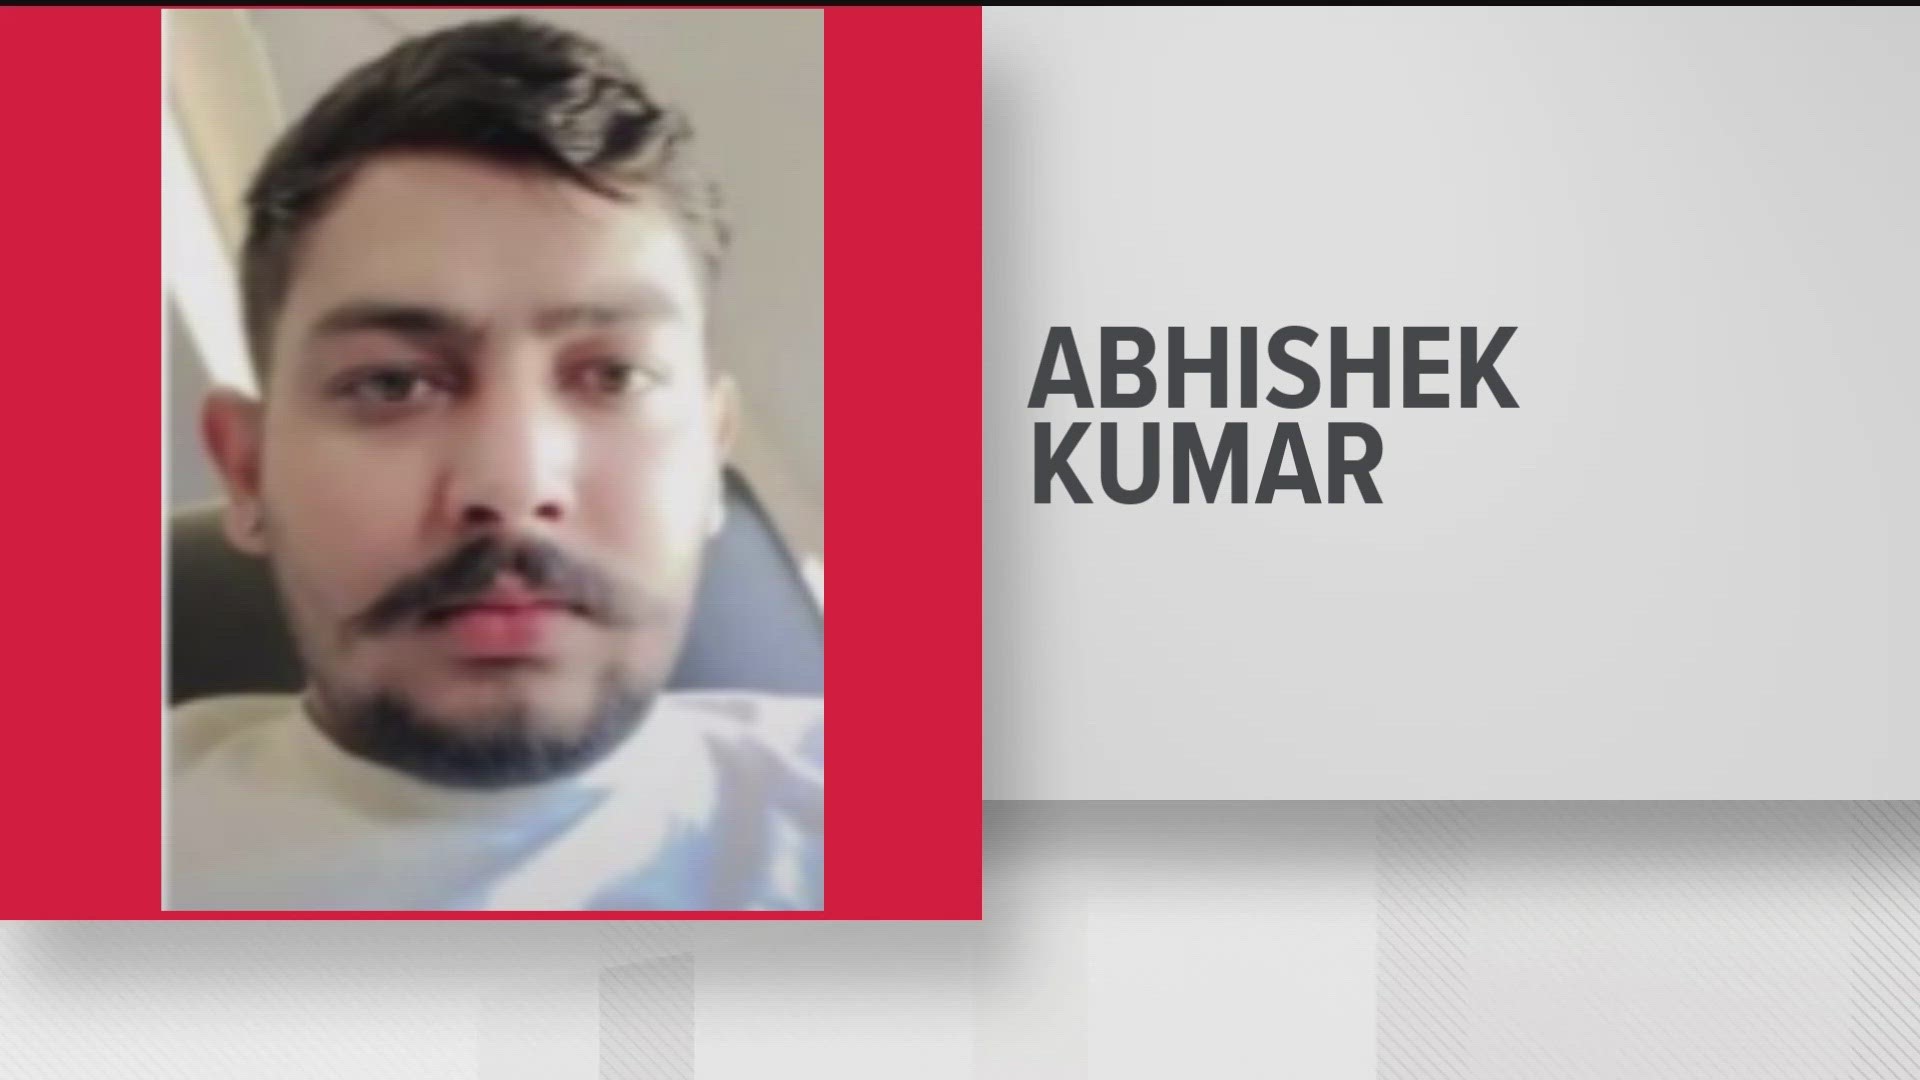 Abhishek Kumar was last seen on August 23 on Noah's Ark Road in Jonesboro.